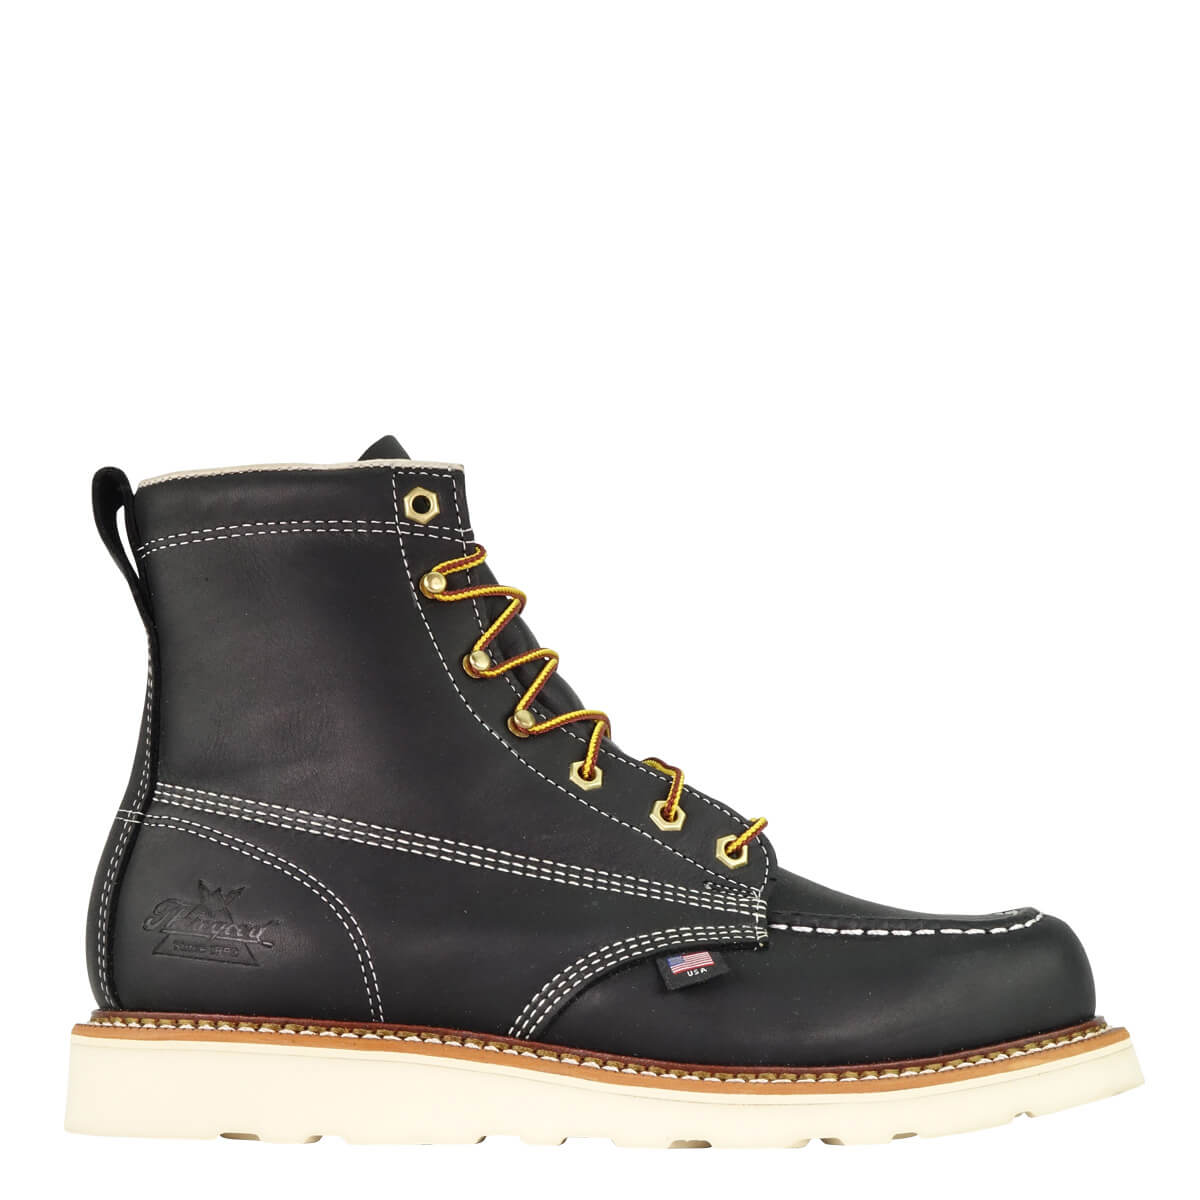 Thorogood Boots - American Heritage 6" Moc Toe - Black